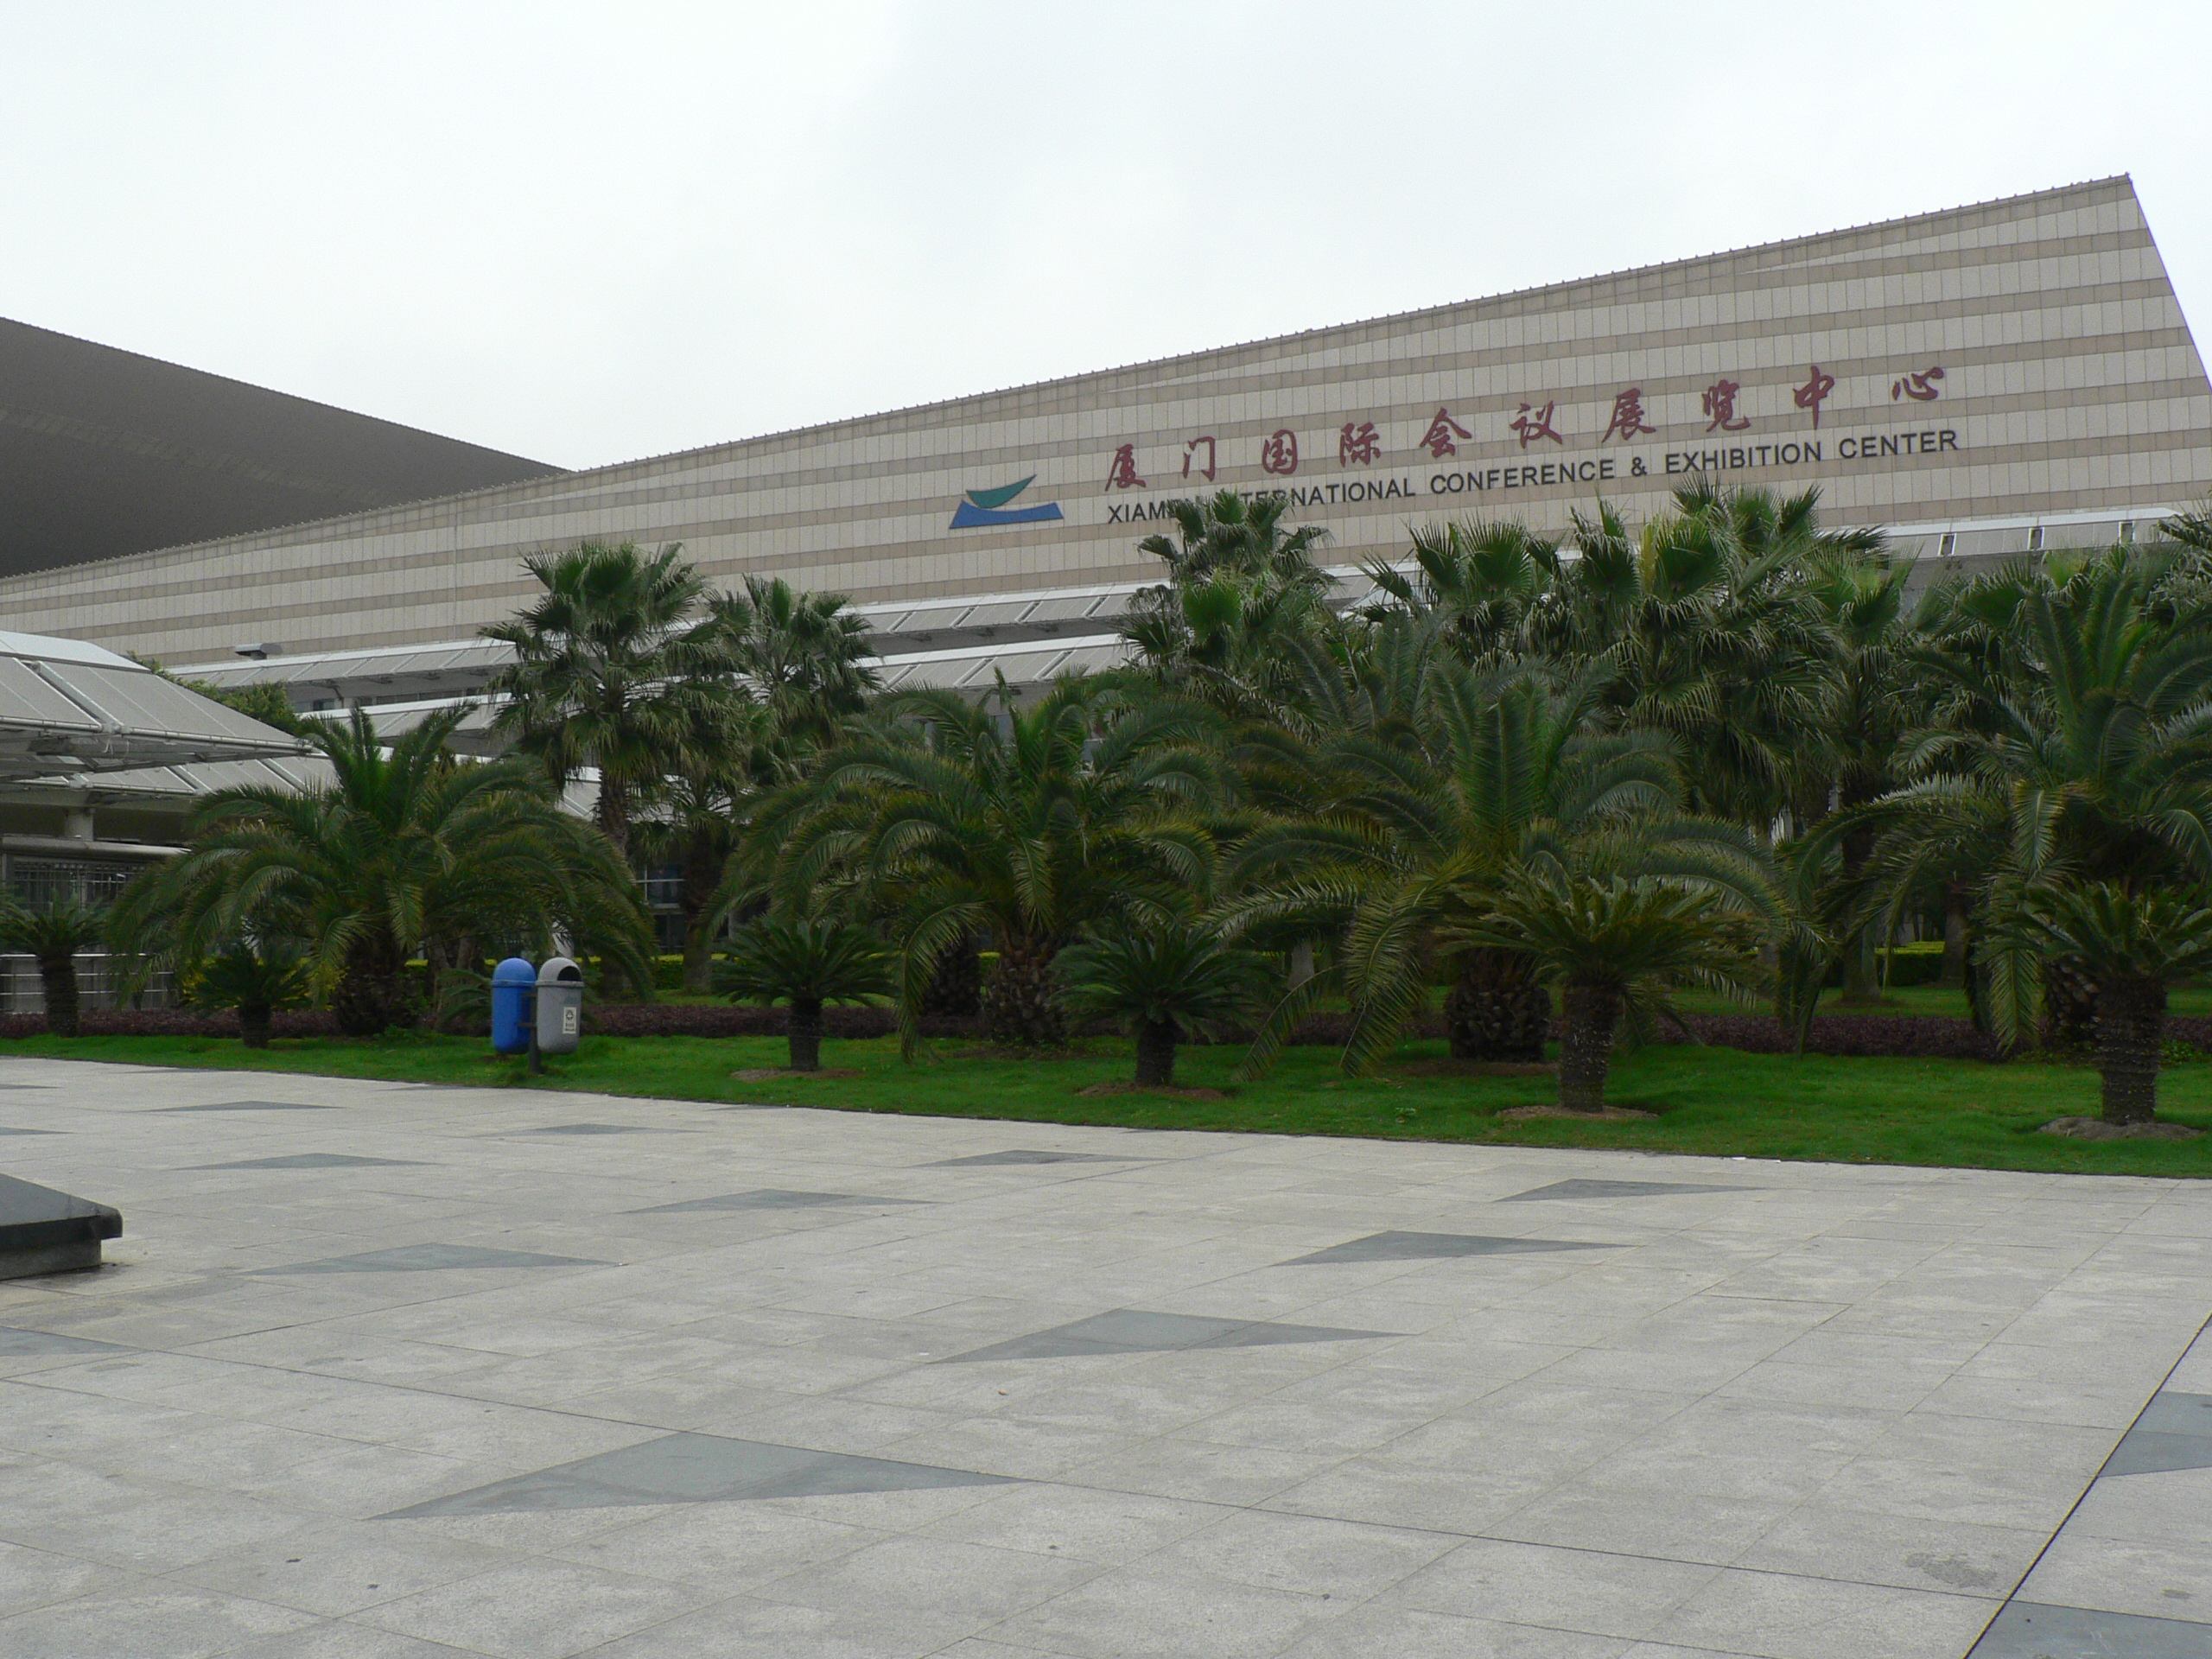 厦门国际会议展览中心Xiamen international conference & exhibition center